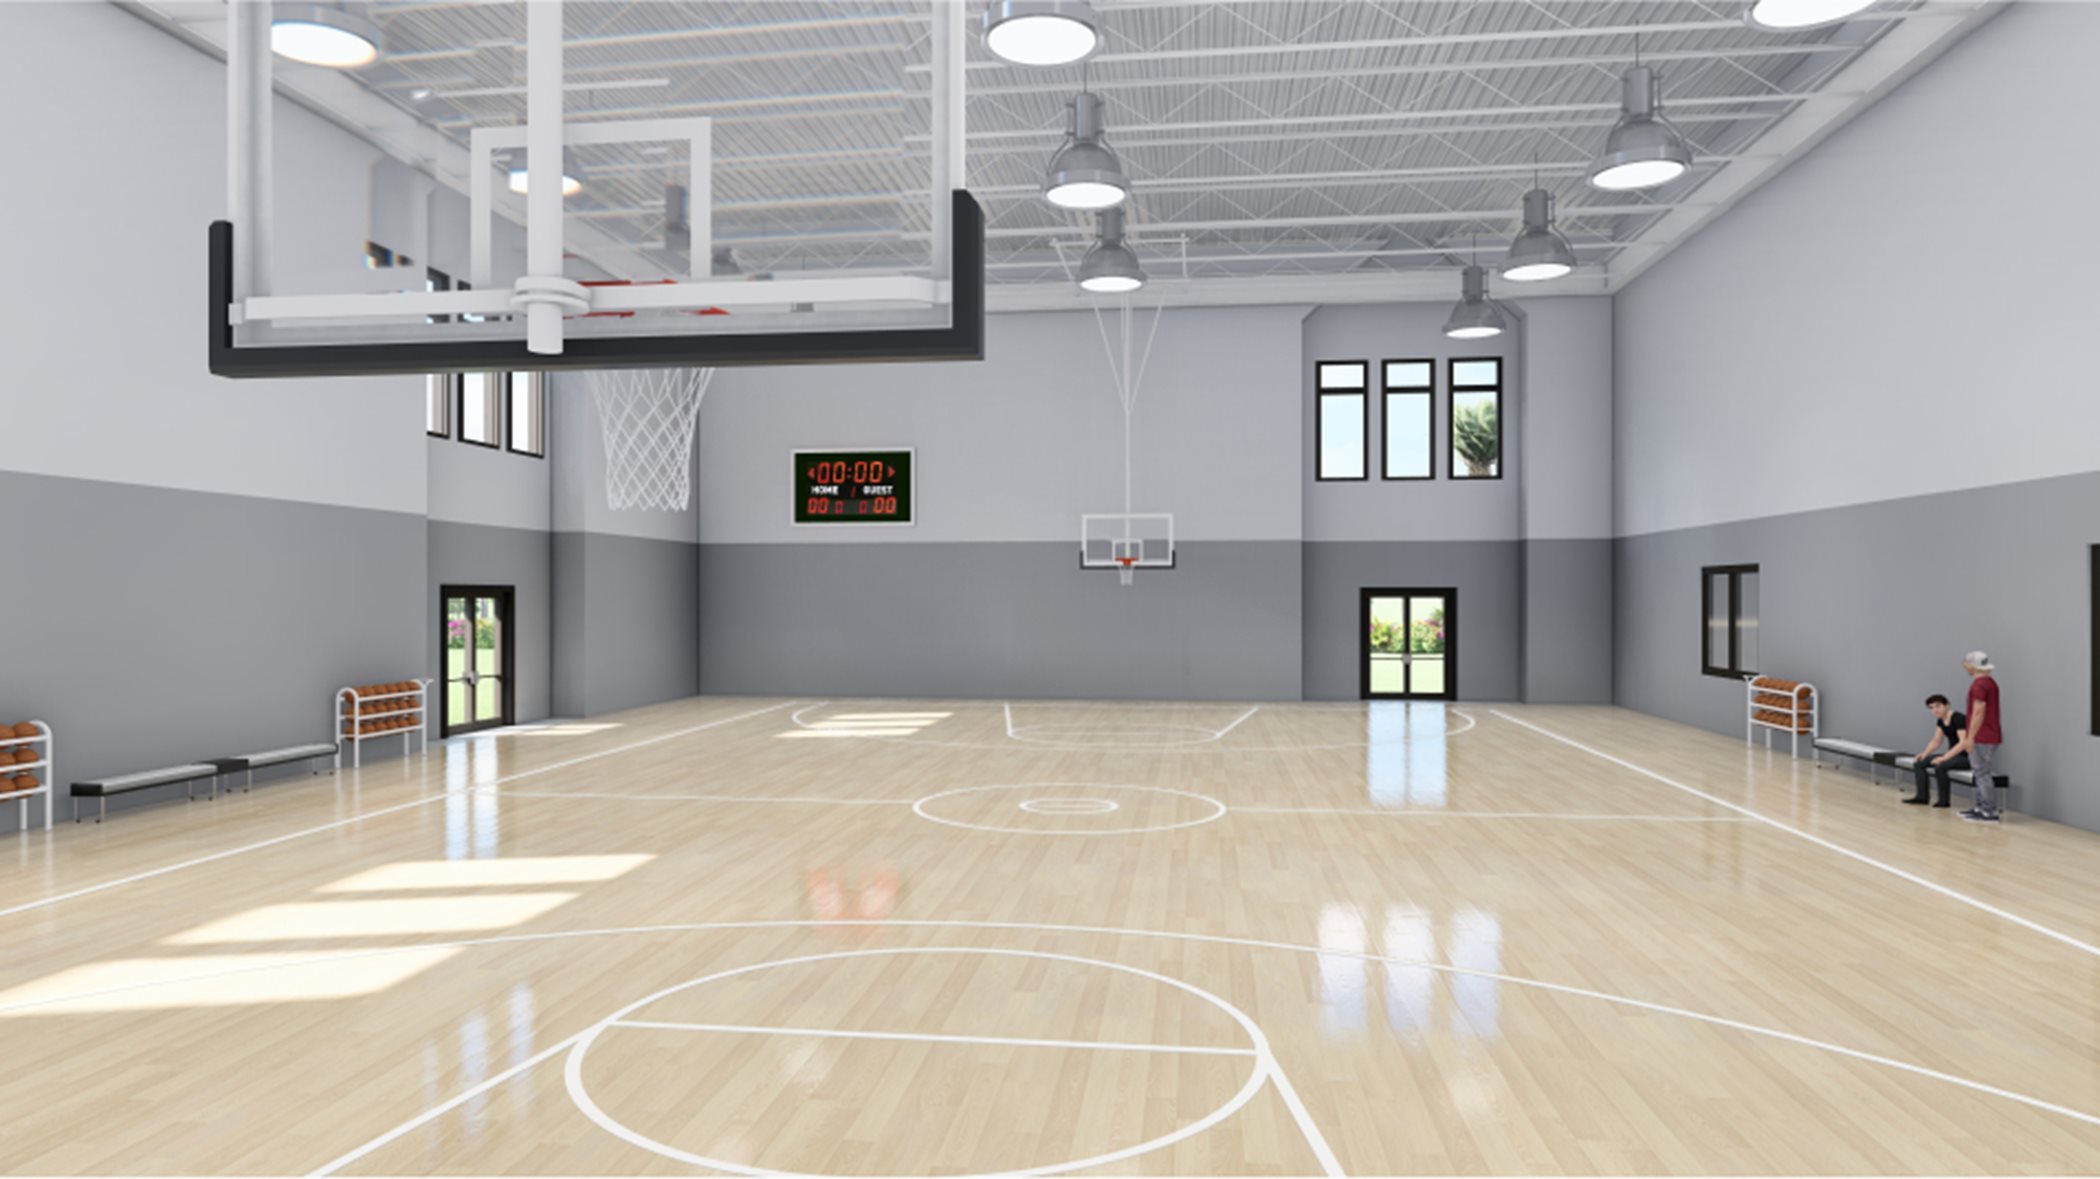 Verdana Village Basketball Court